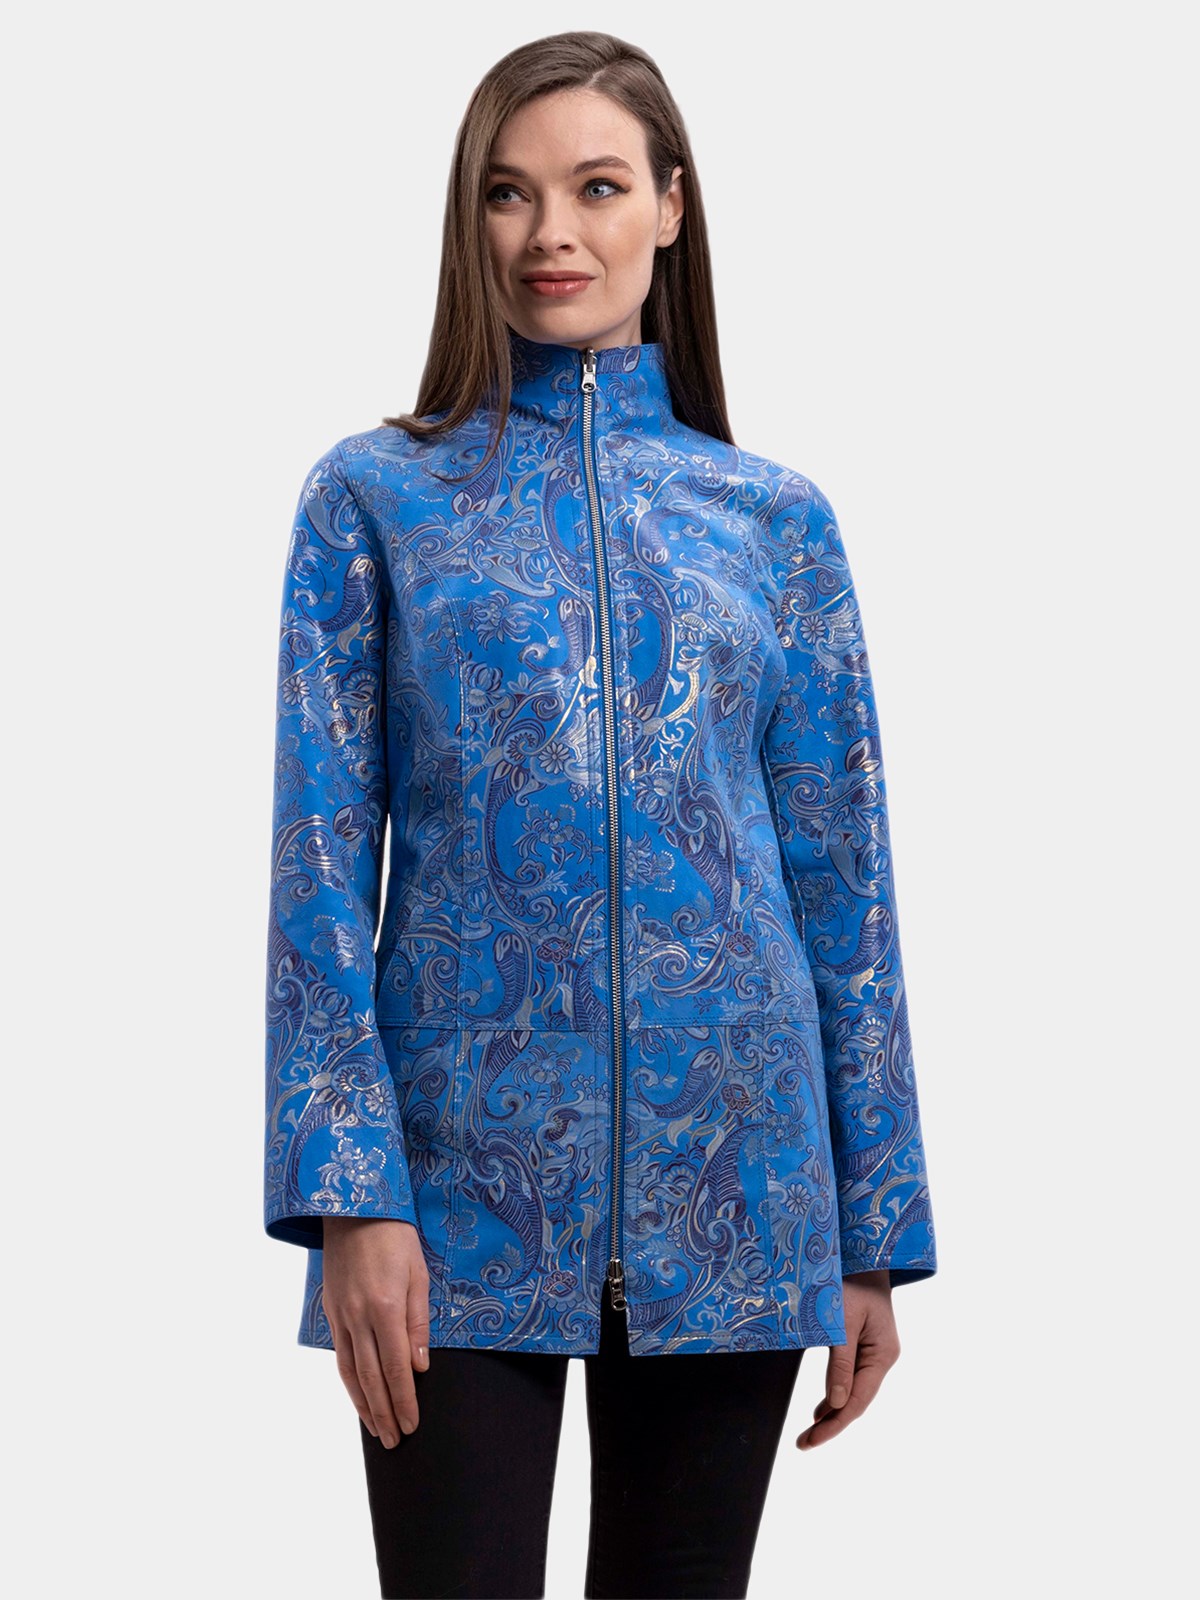 Woman's Blue Floral Print Leather Jacket